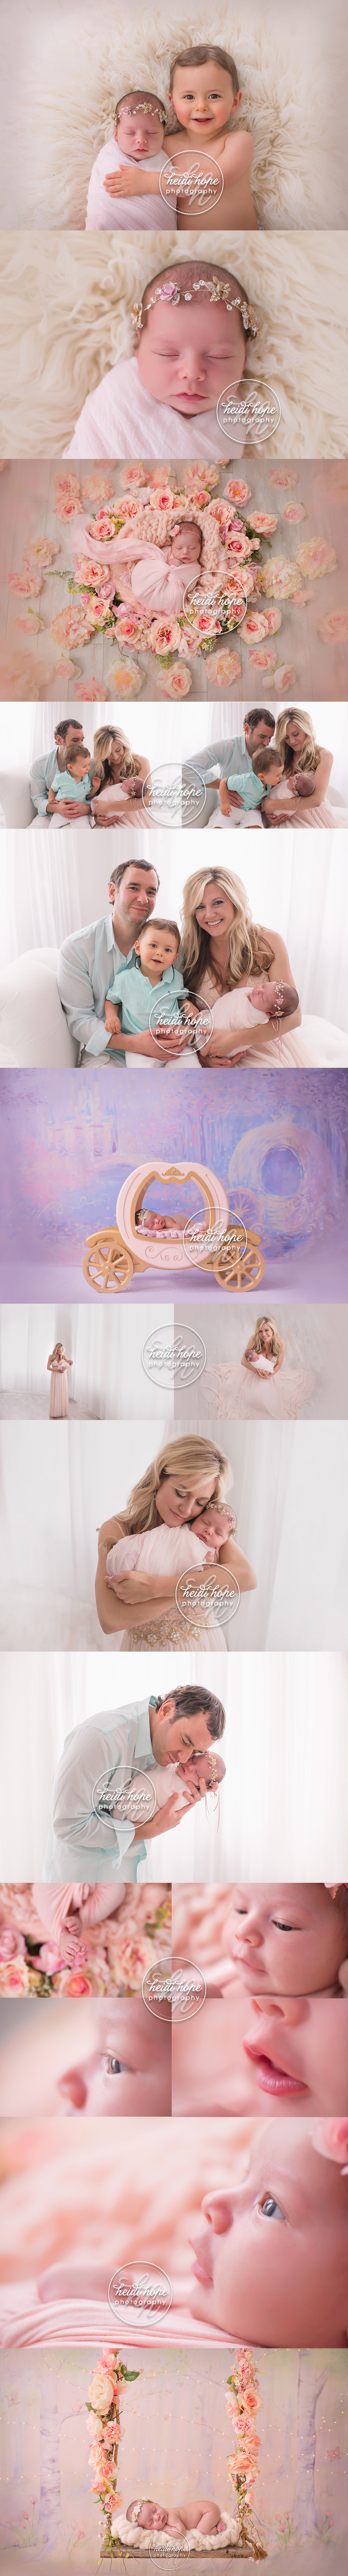 newborn-princess-magical-portrait-session-by-boston-newborn-photographer-heidi-hope